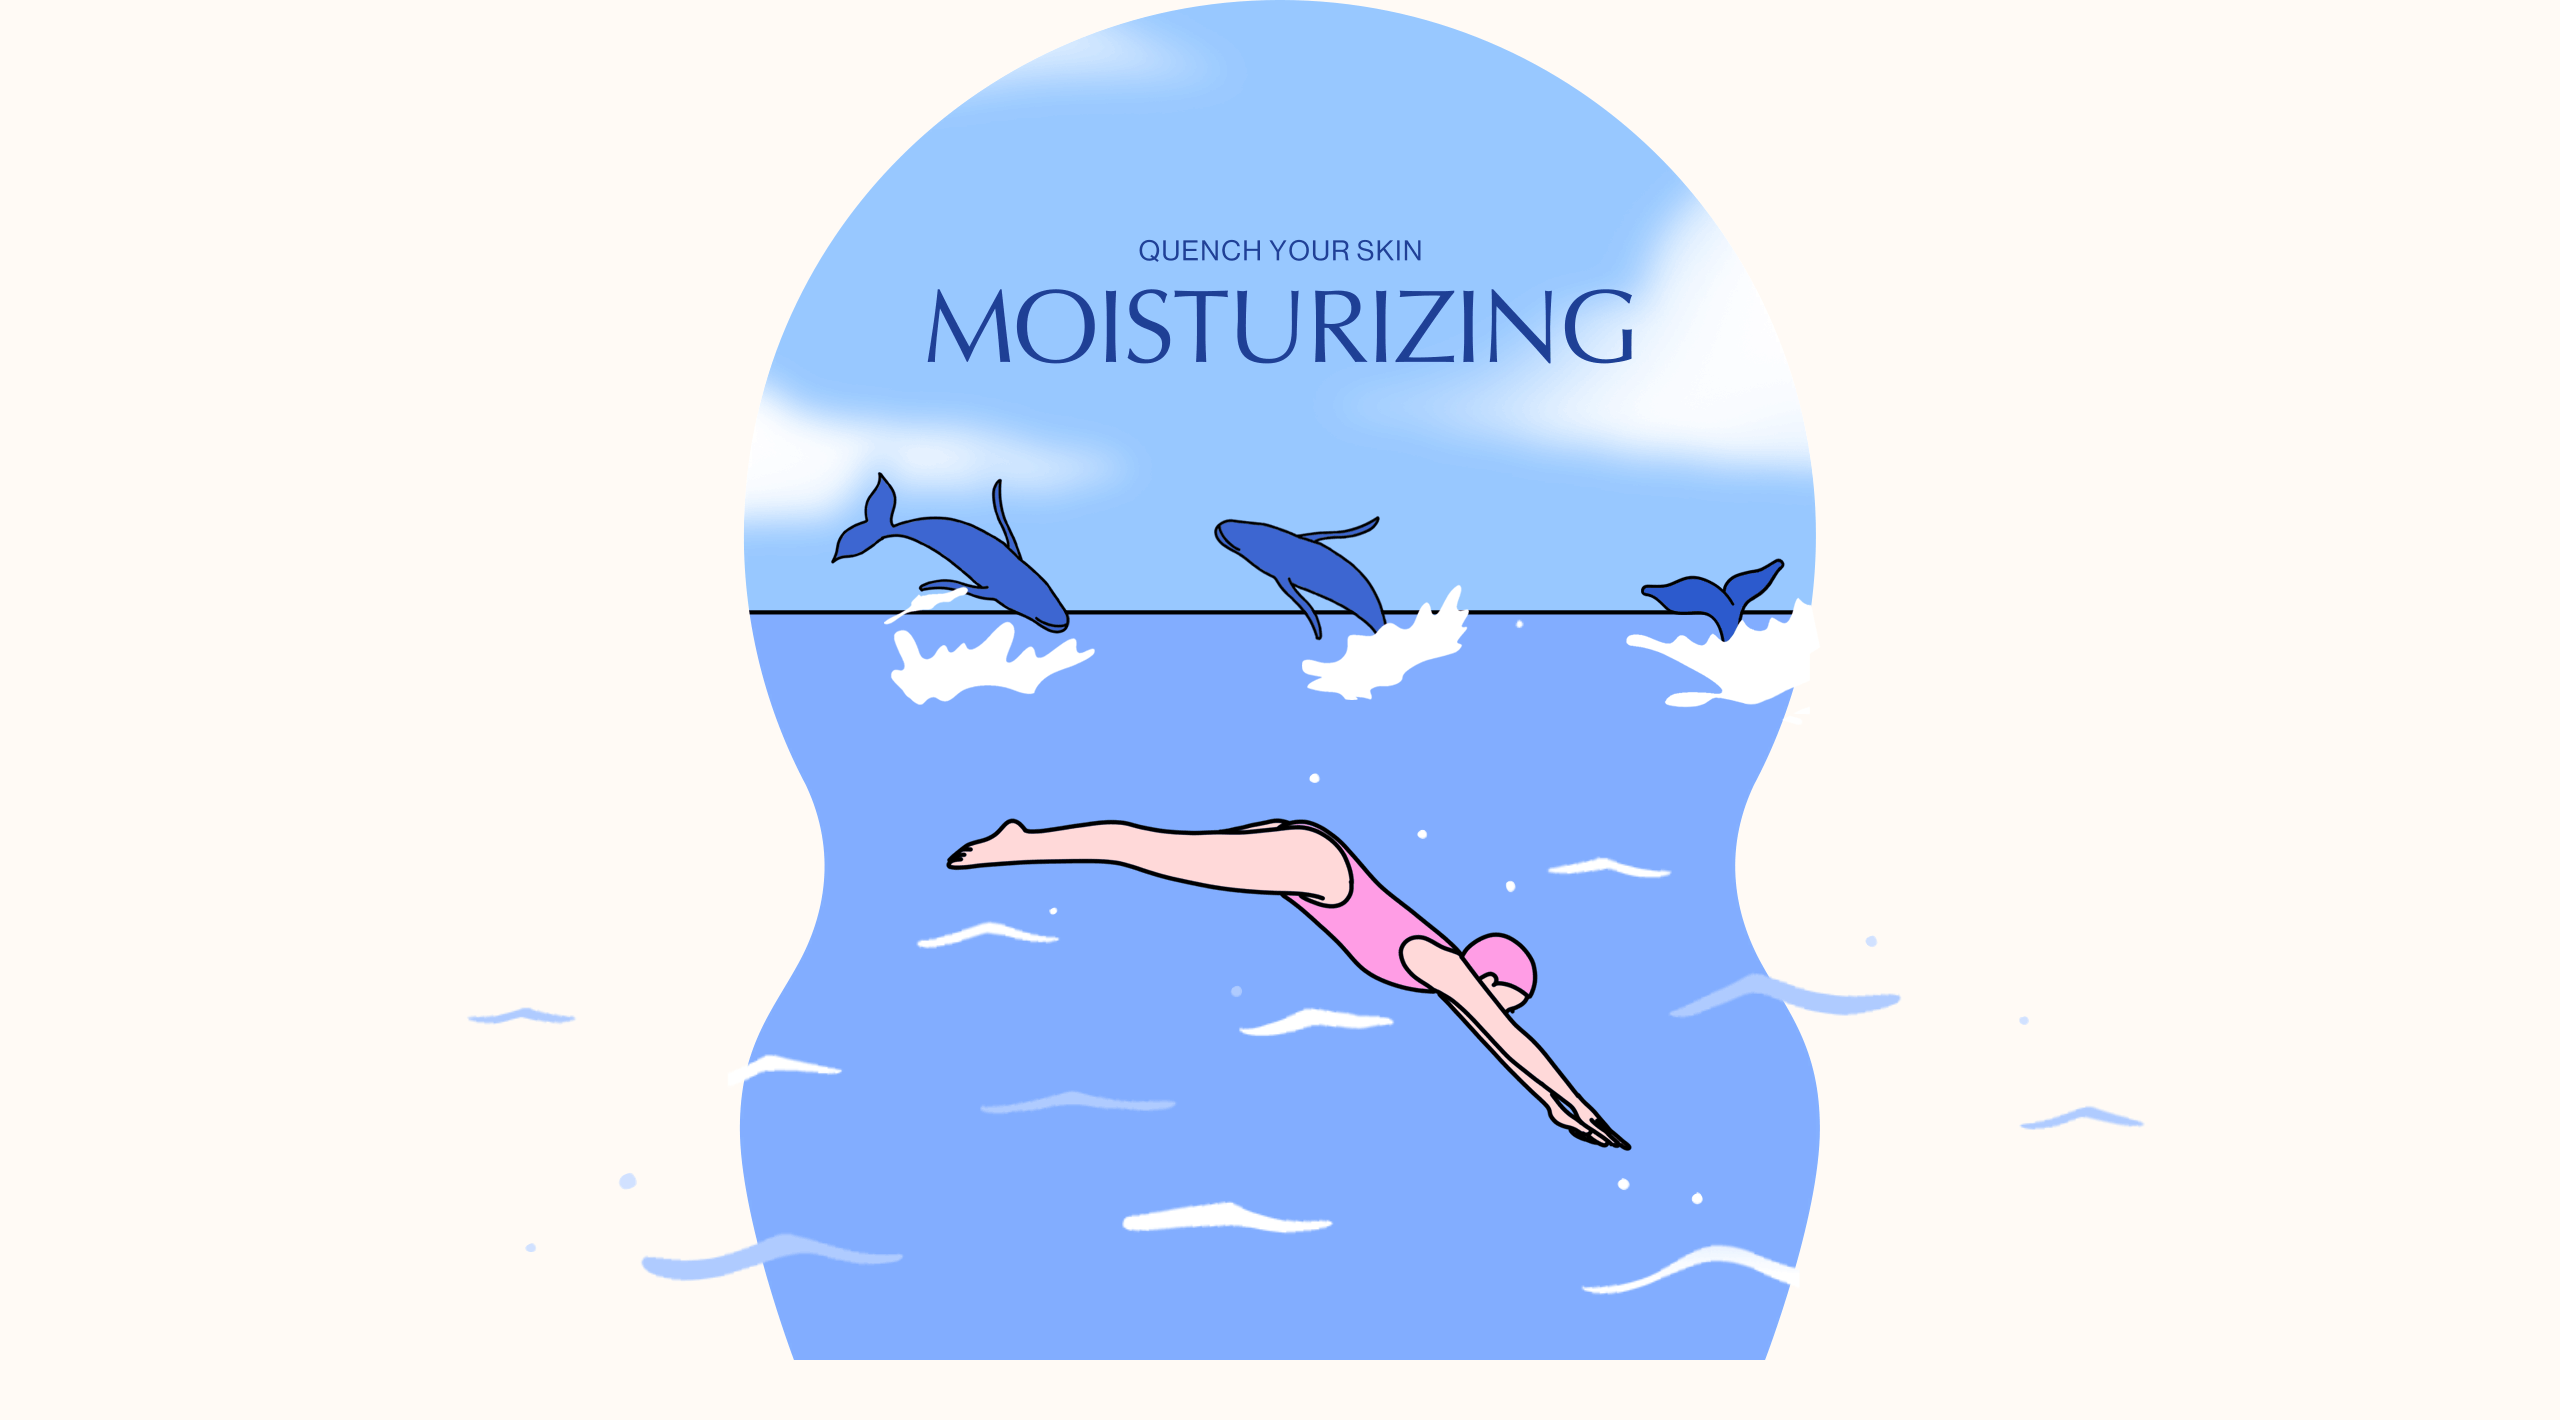 MOISTURIZING